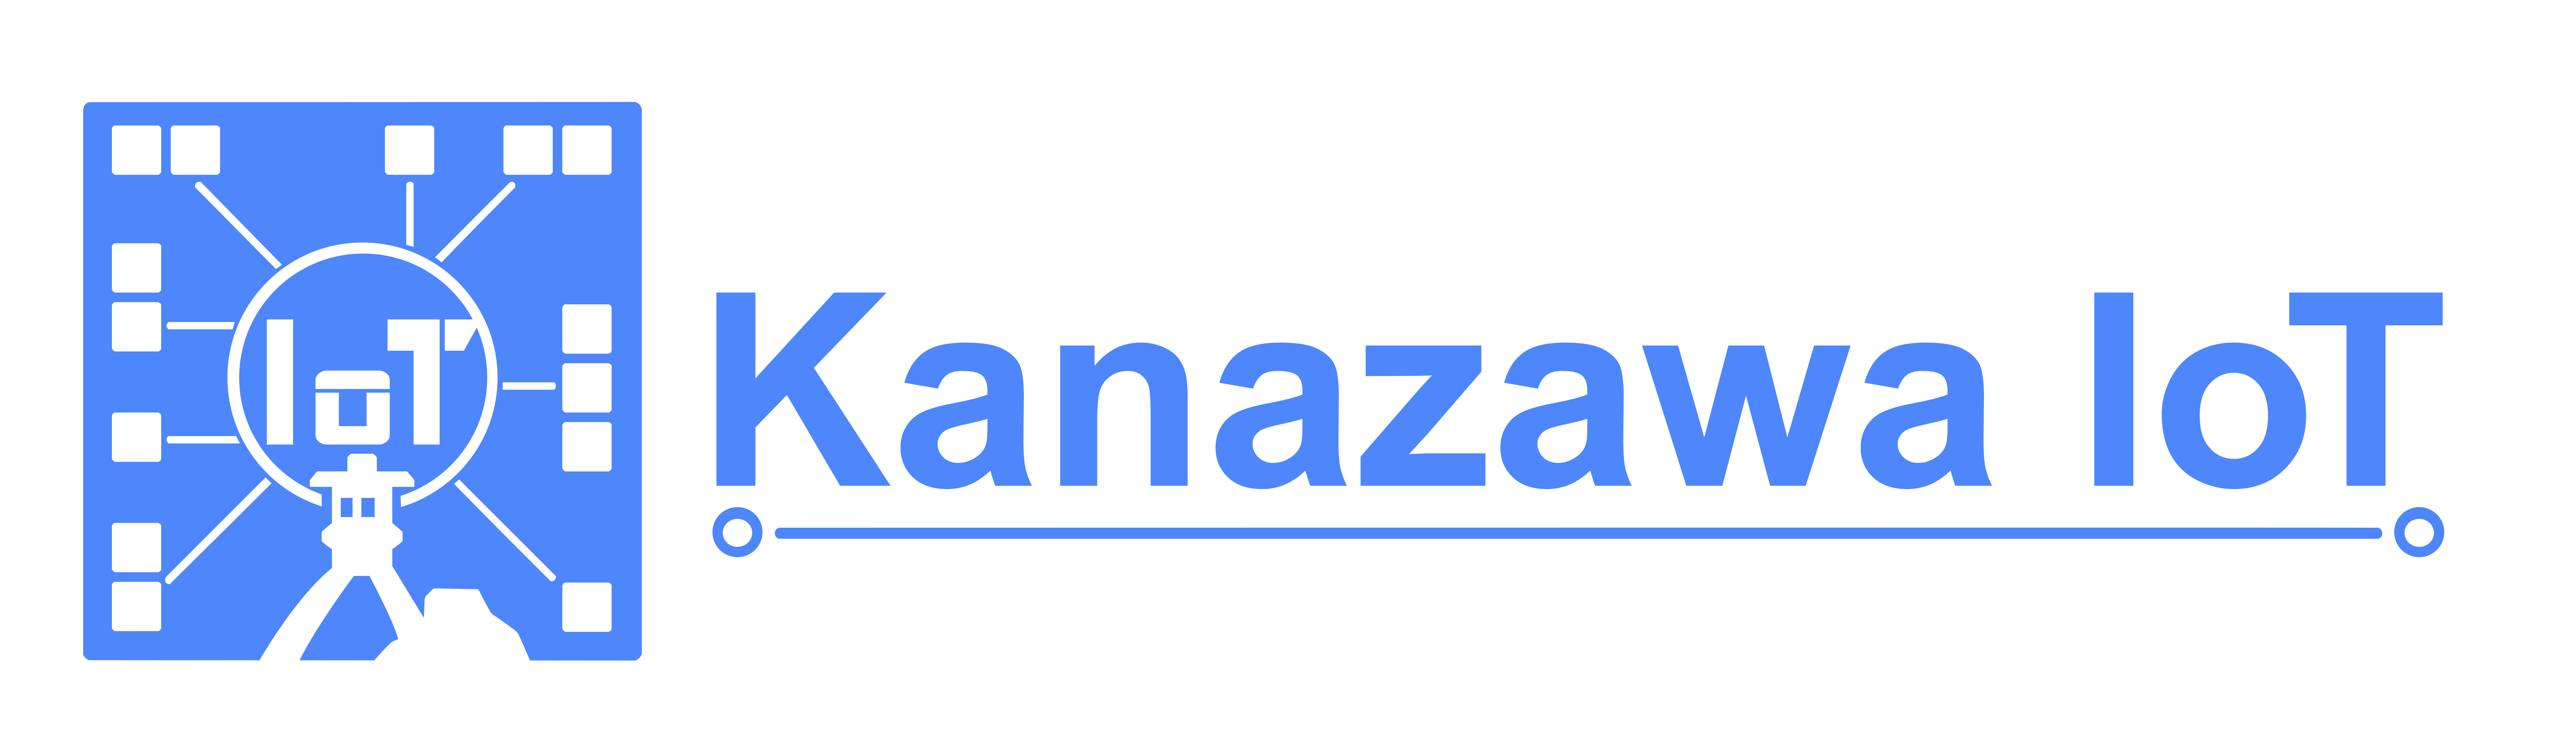 Kanazawa-IoT-banner-blue